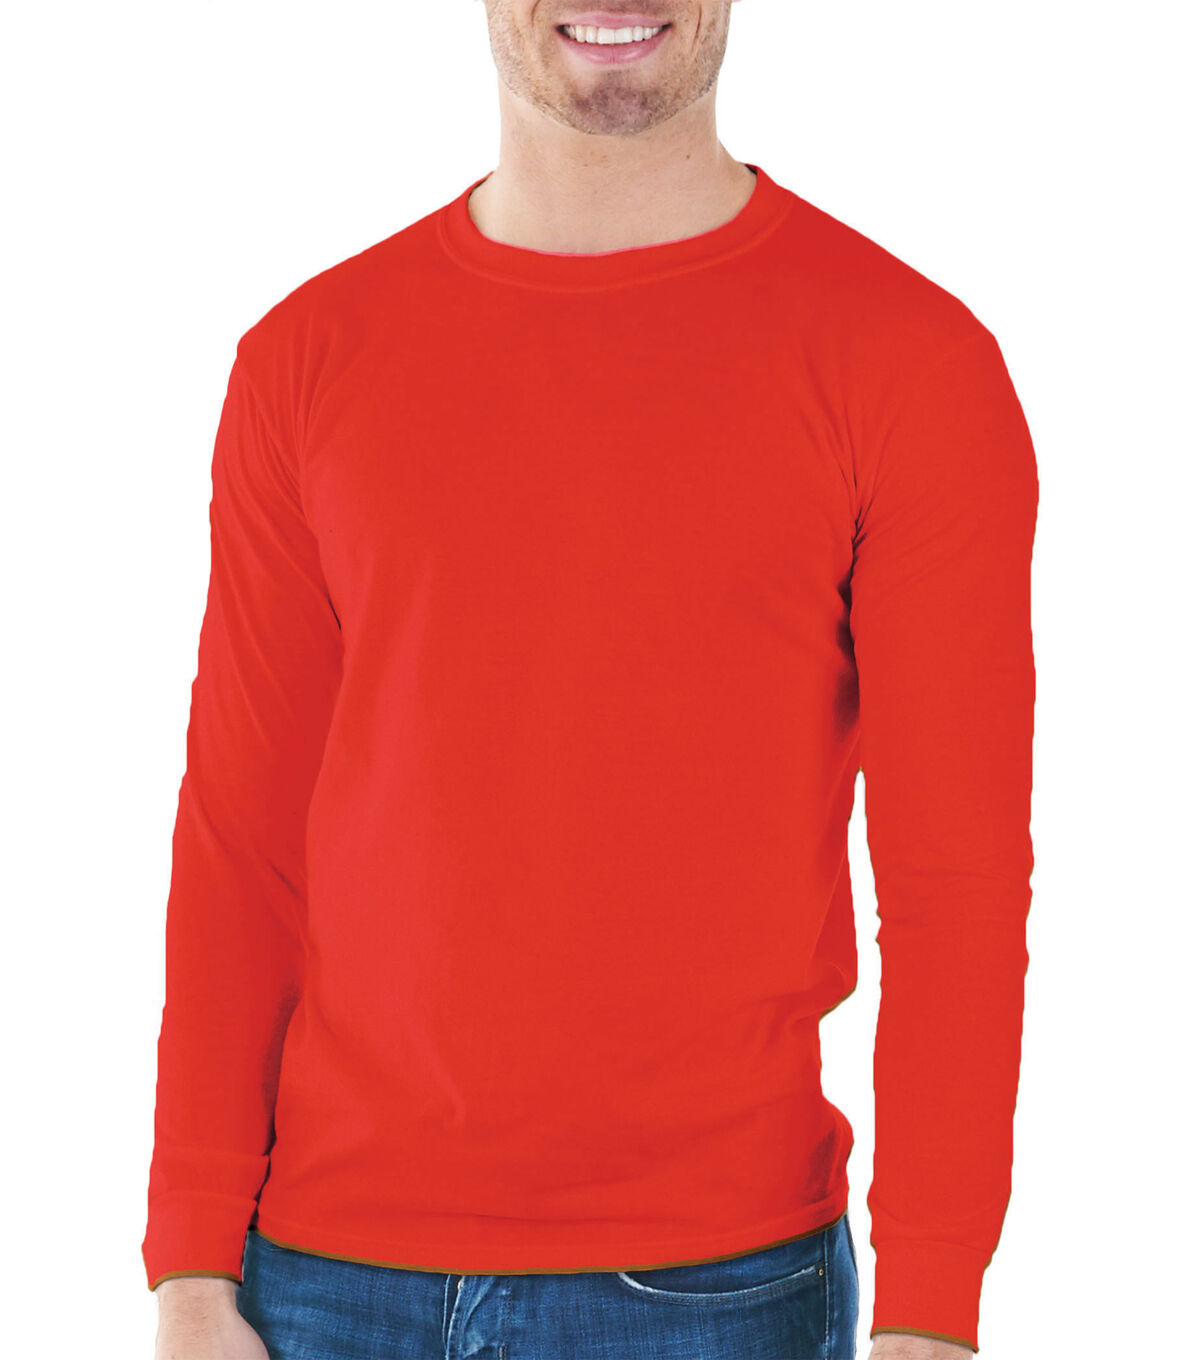 red sleeve shirt